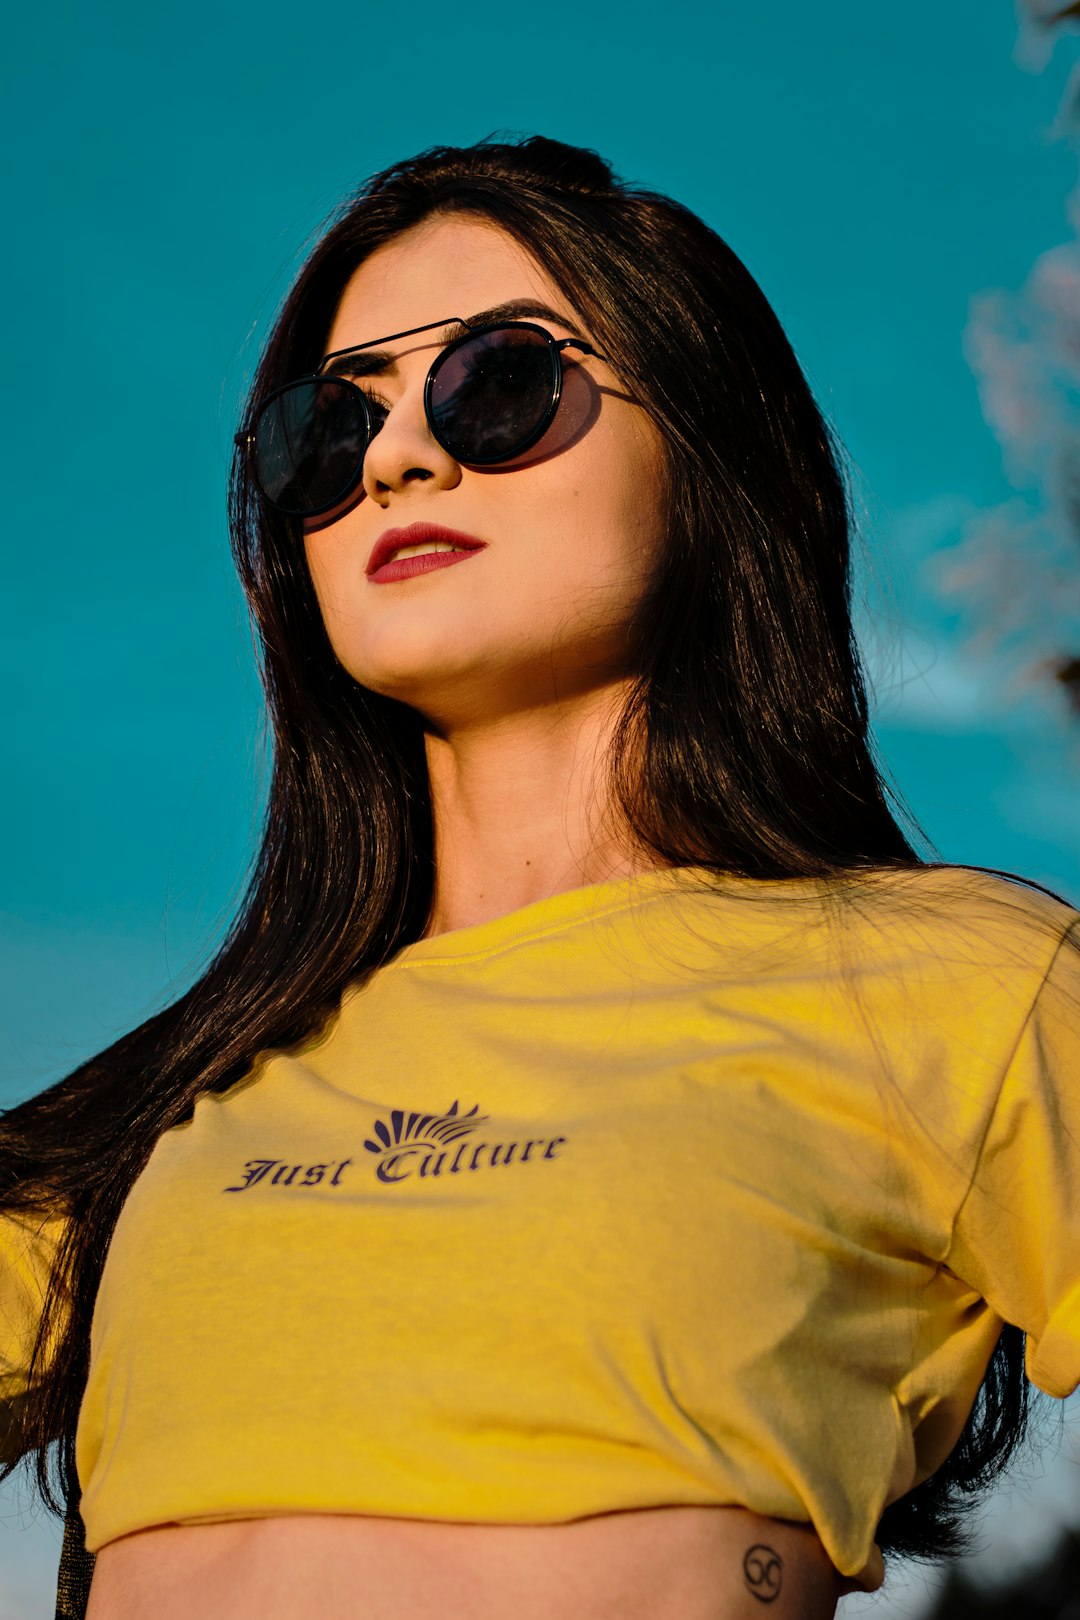 woman in yellow crew neck shirt wearing black sunglasses